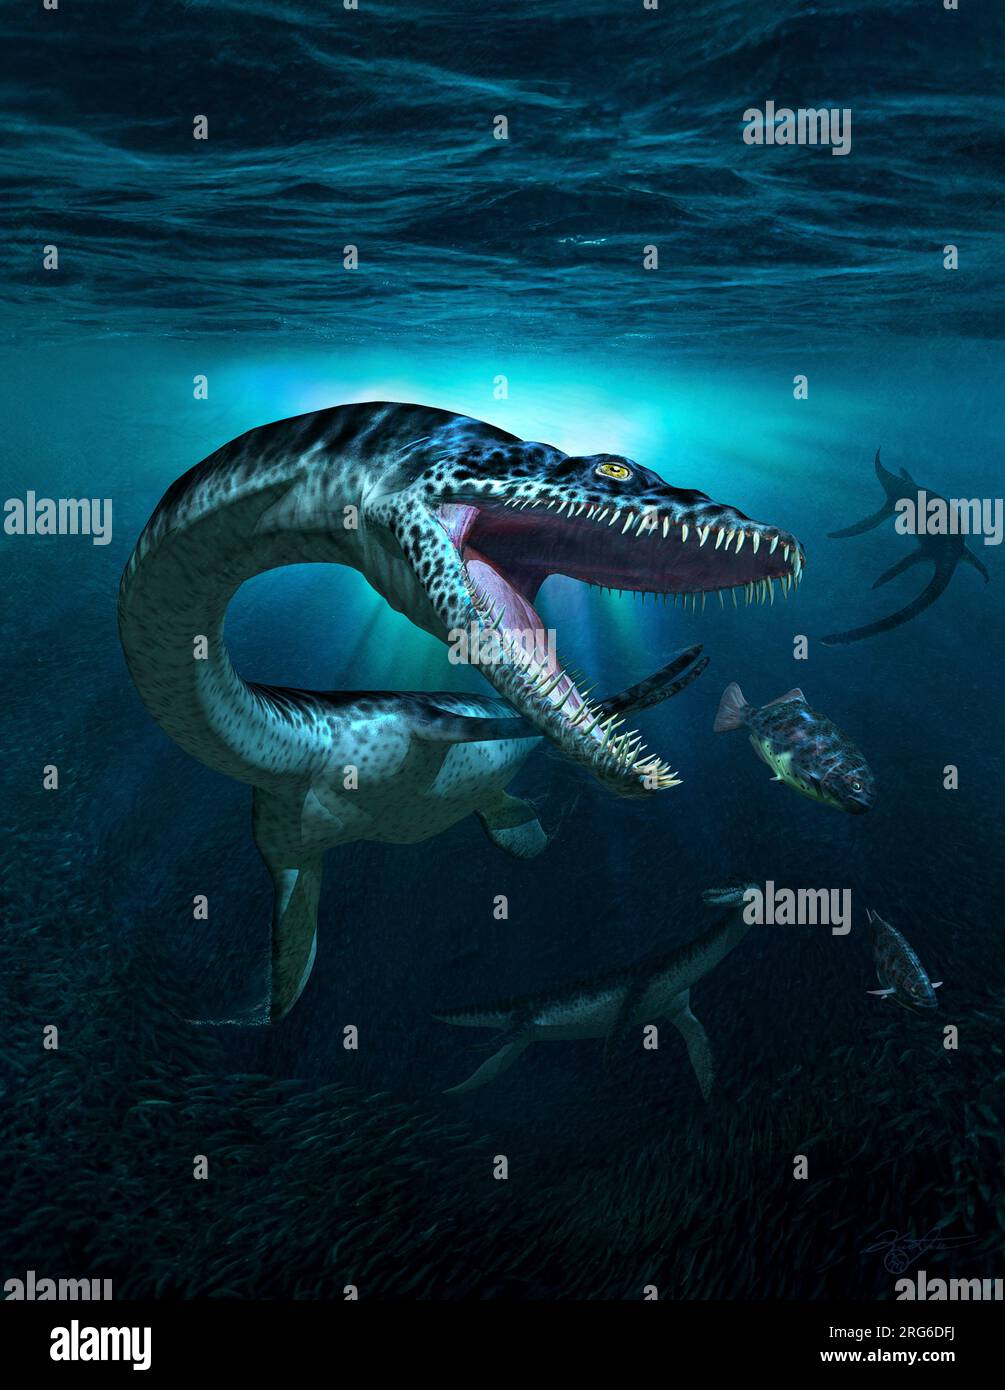 Plesiosaurus reptil prehistórico hutning peces. Foto de stock